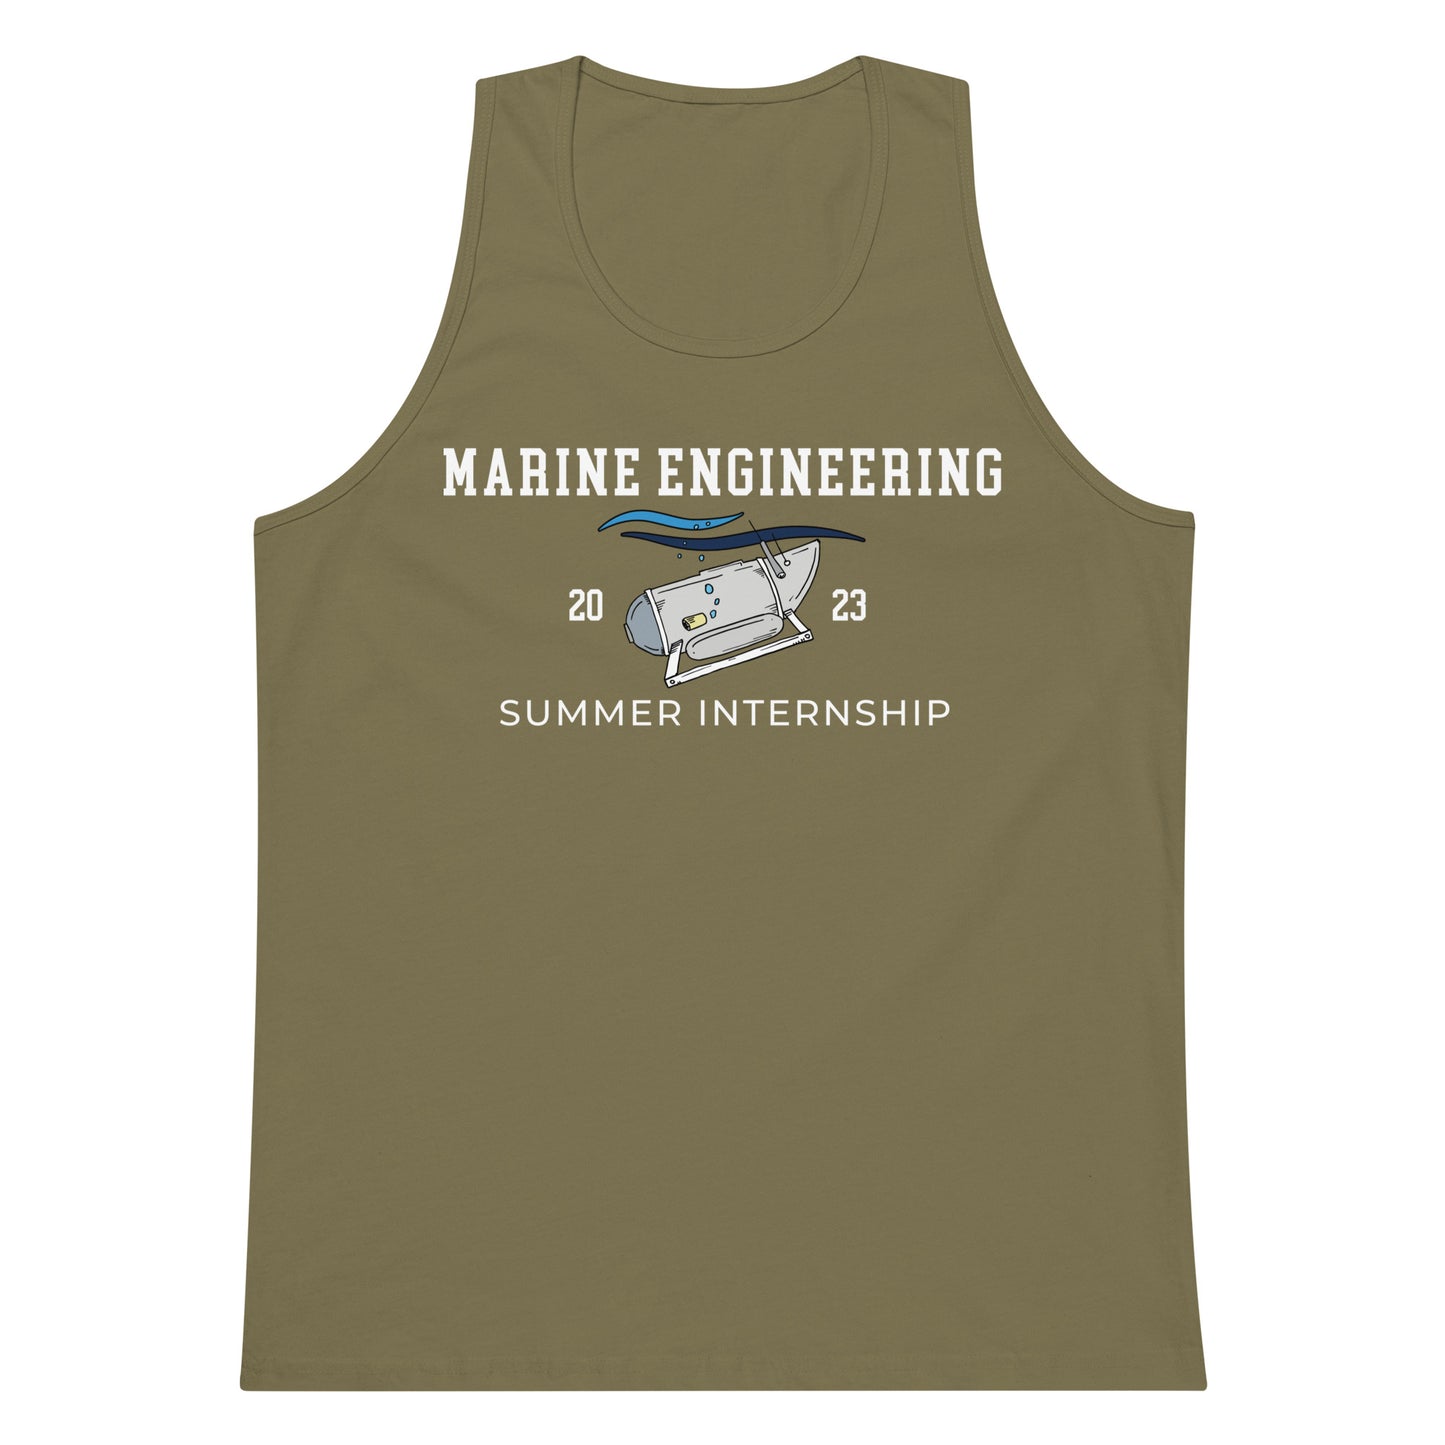 Marine Engineering Summer Internship tank top